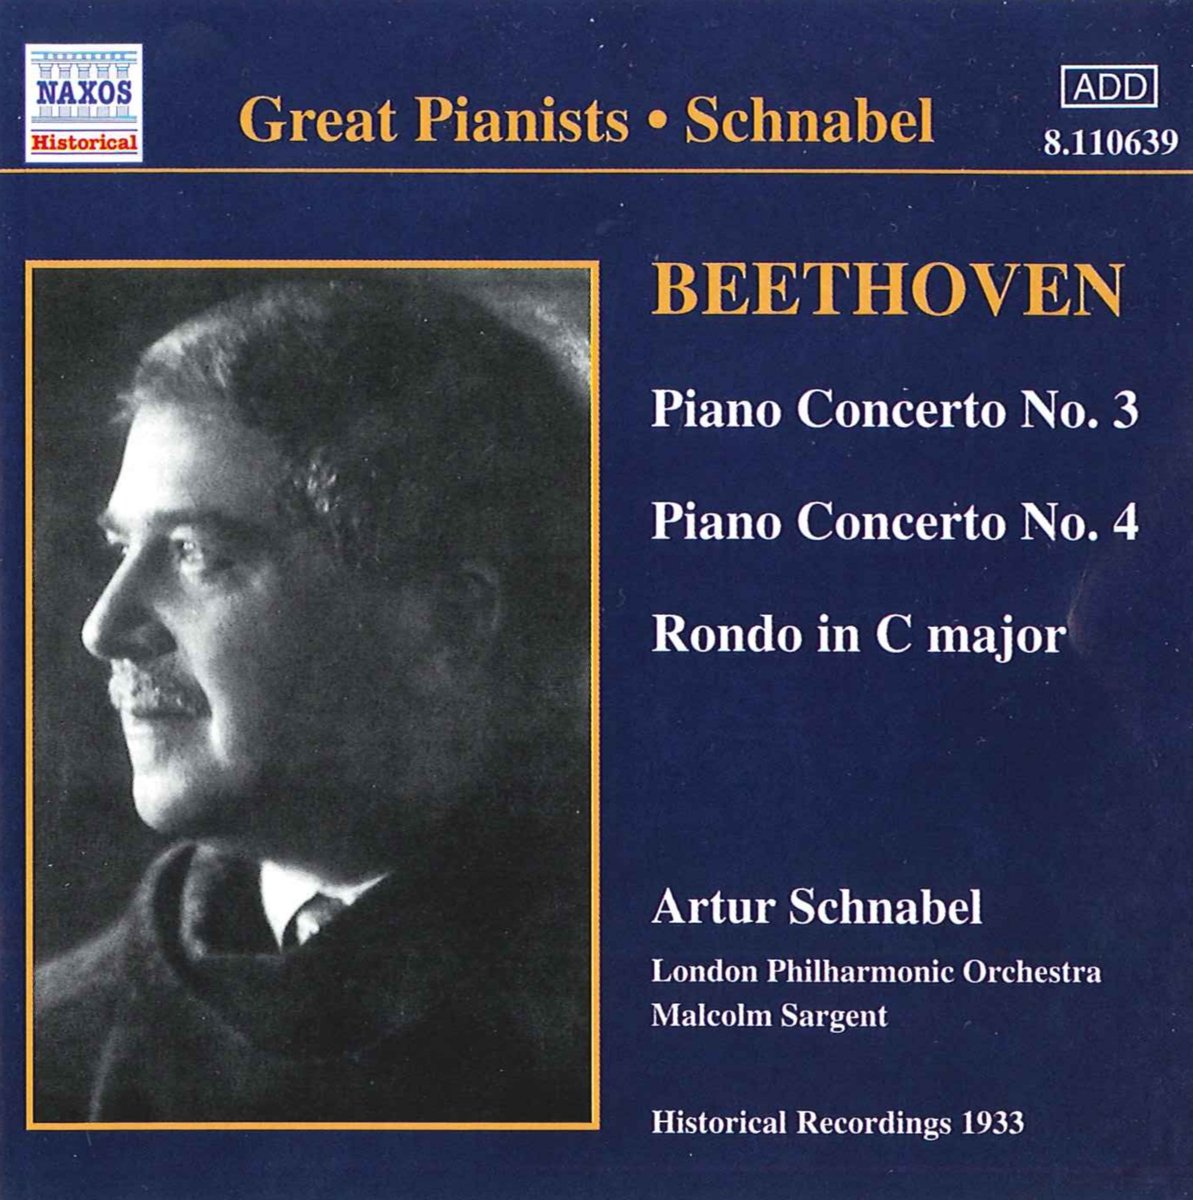 GREAT PIANISTS - SCHNABEL: Beethoven: P.